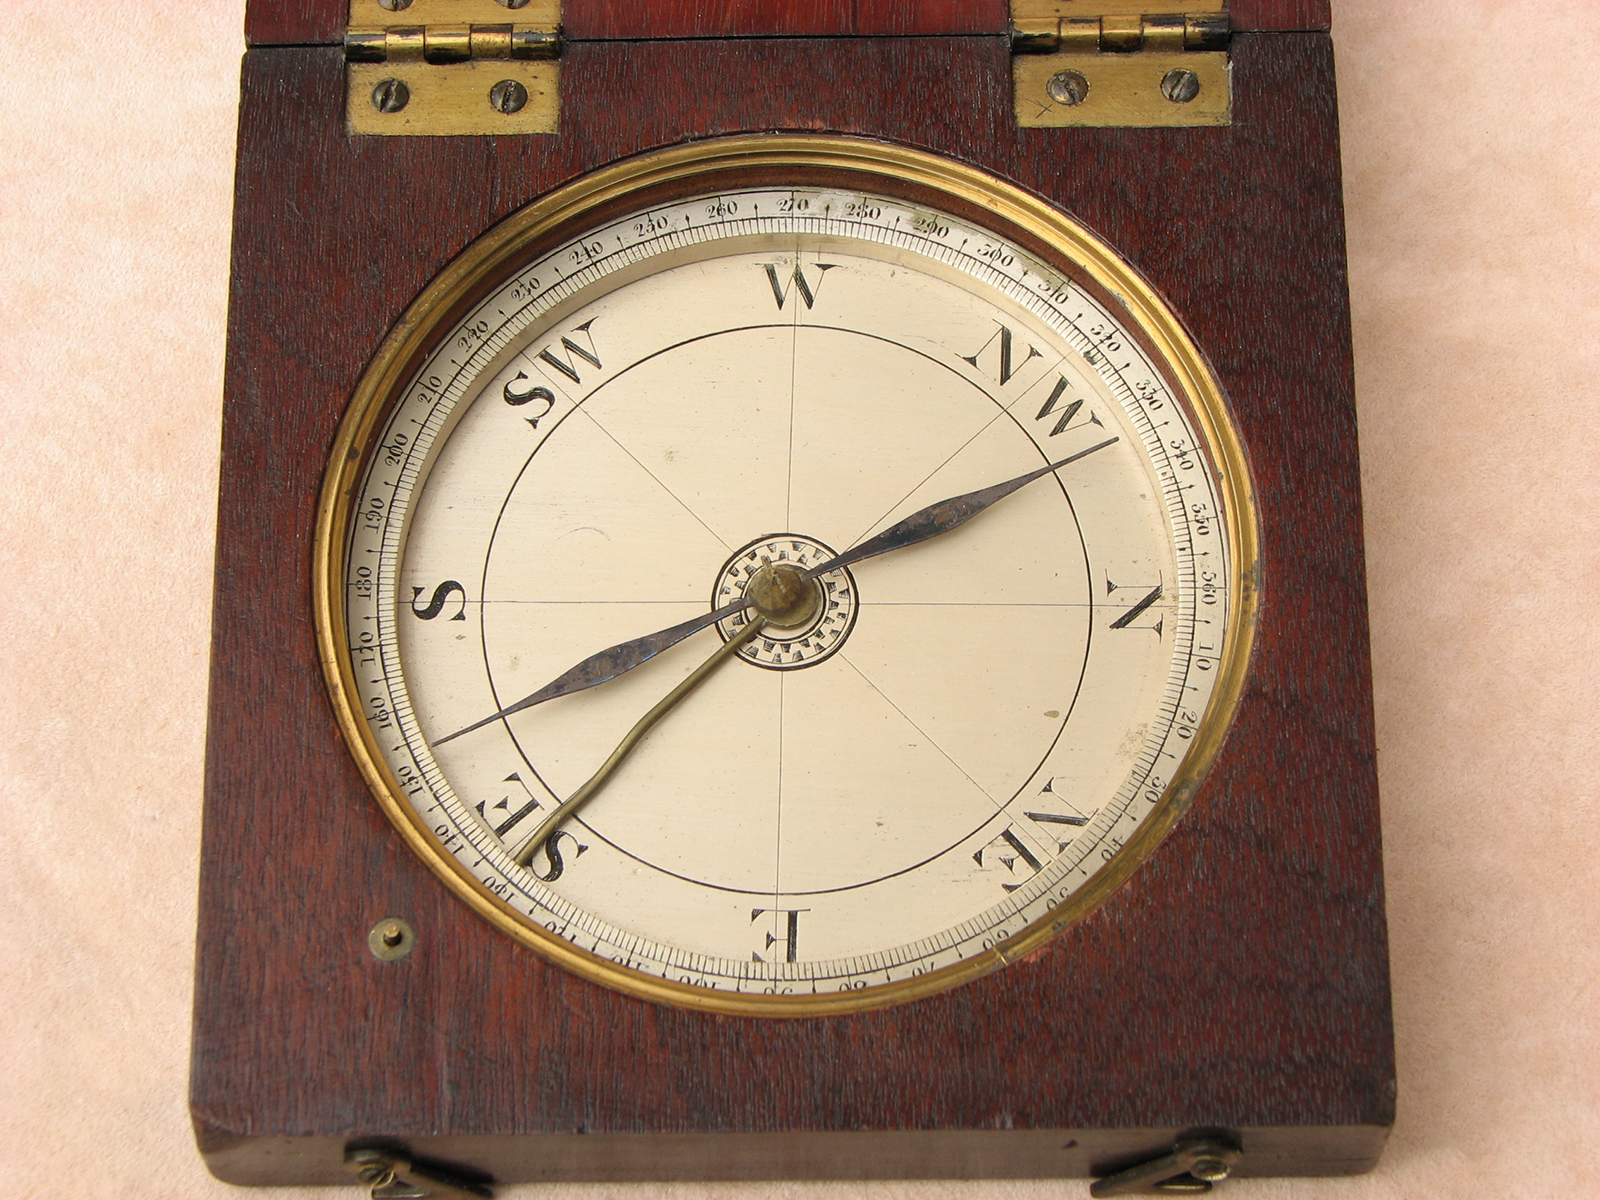 Large 19th century mahogany cased surveyors compass, circa 1820